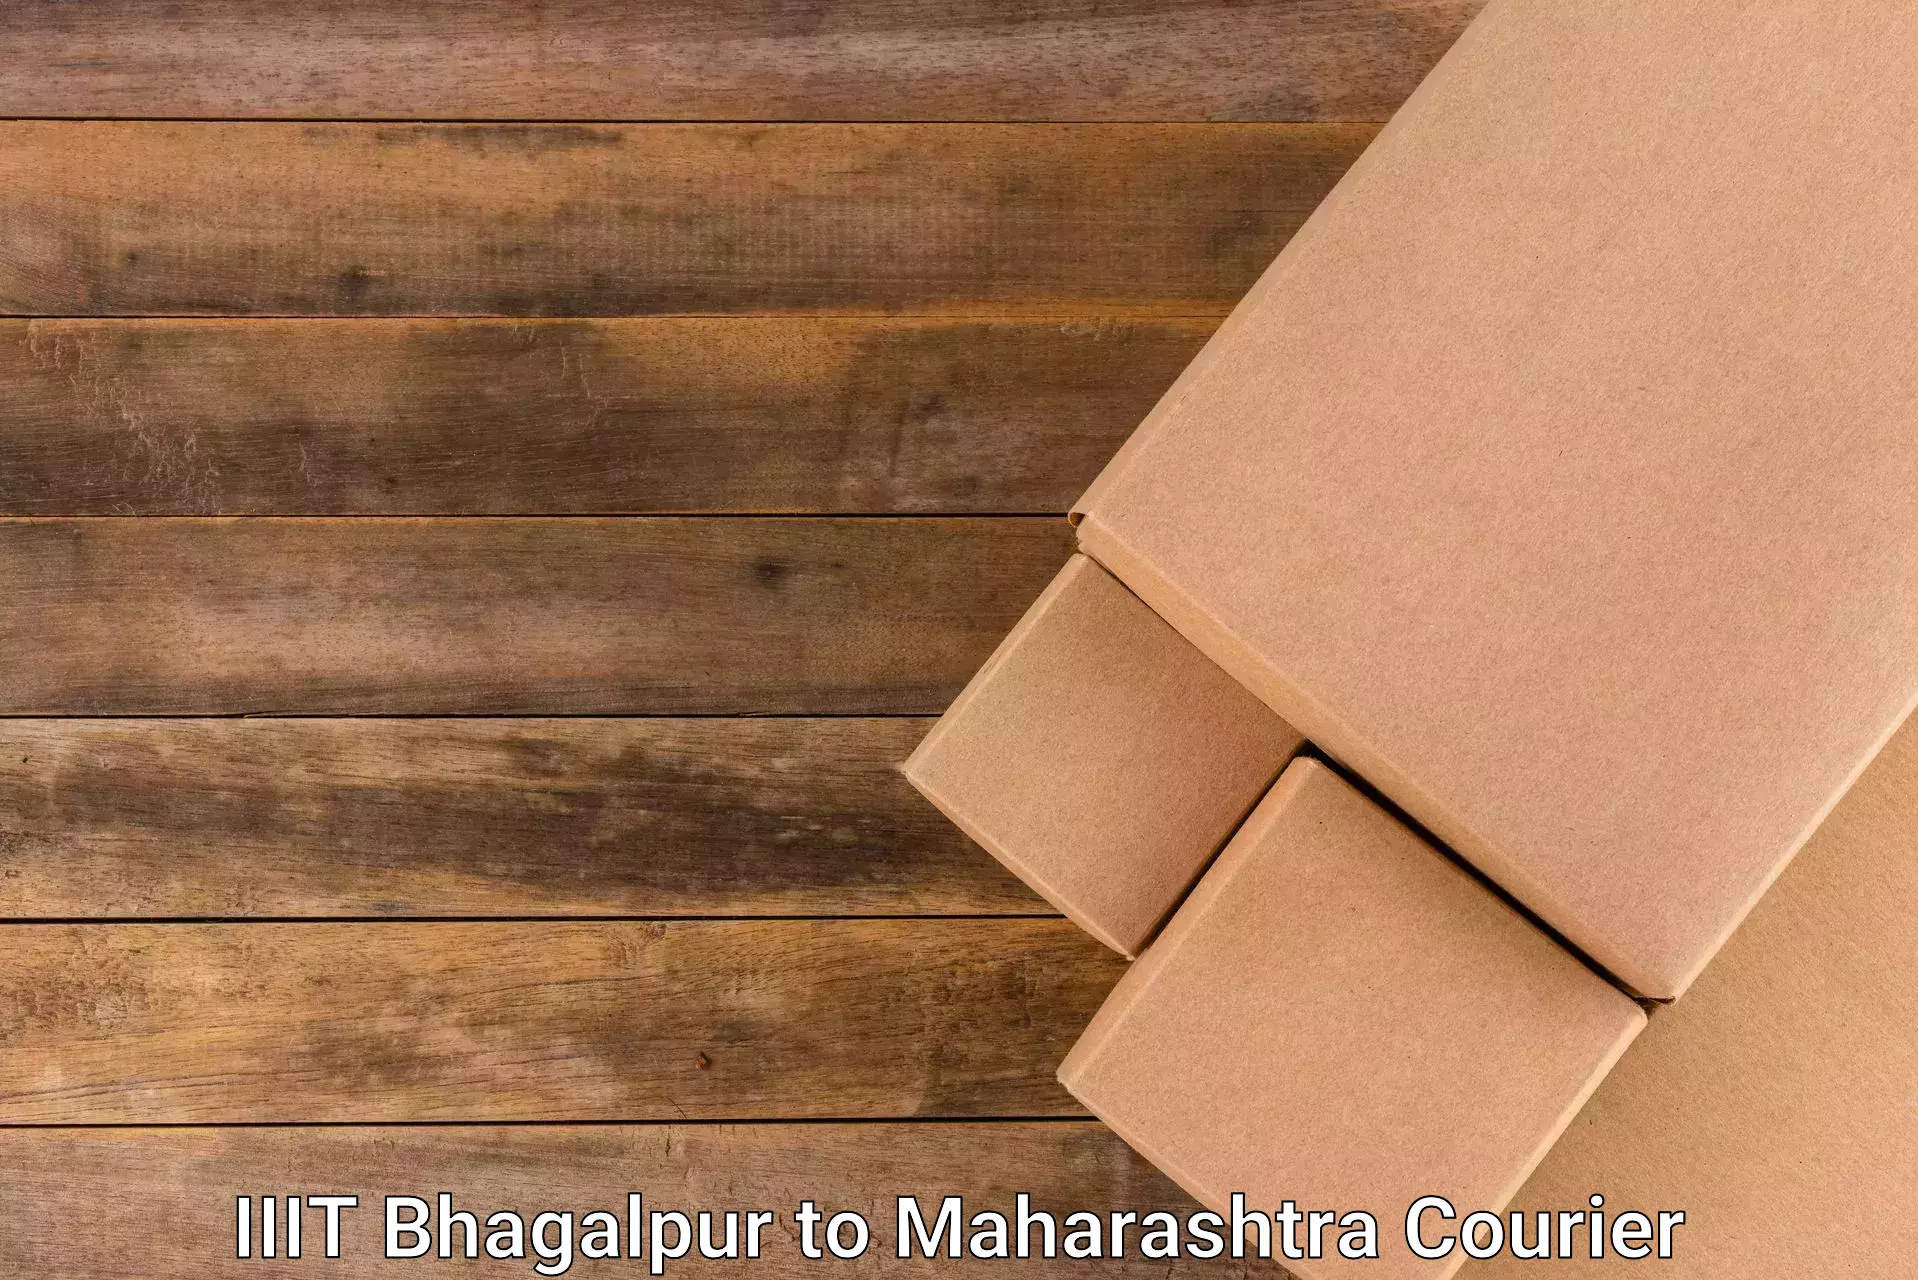 Reliable shipping partners IIIT Bhagalpur to Maharashtra